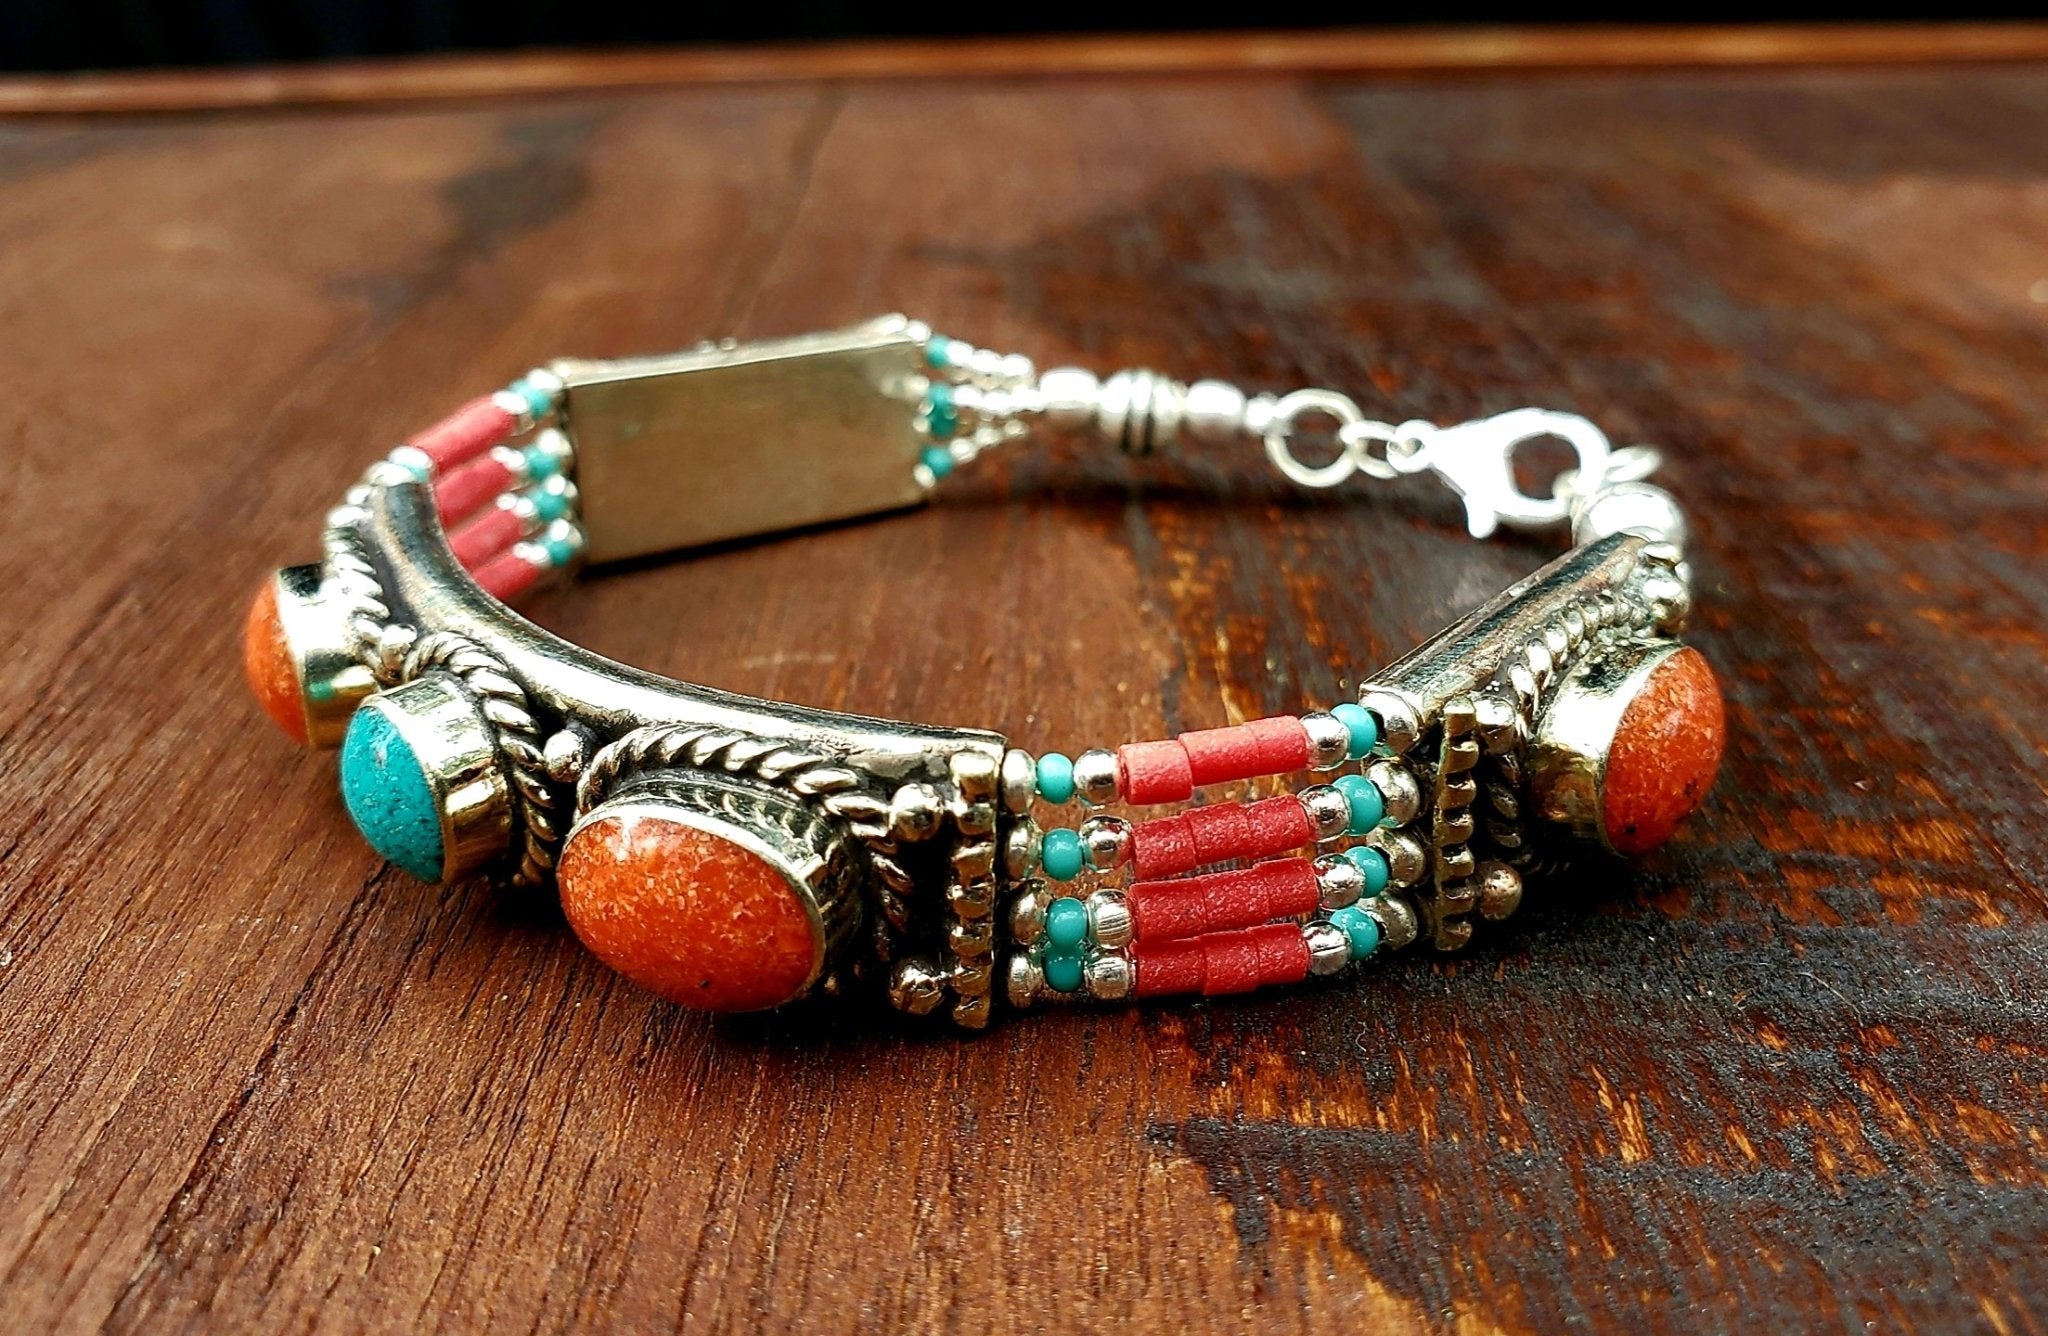 Tibetan Buddha Rope Bracelet - Your Buddhist Lucky Charm